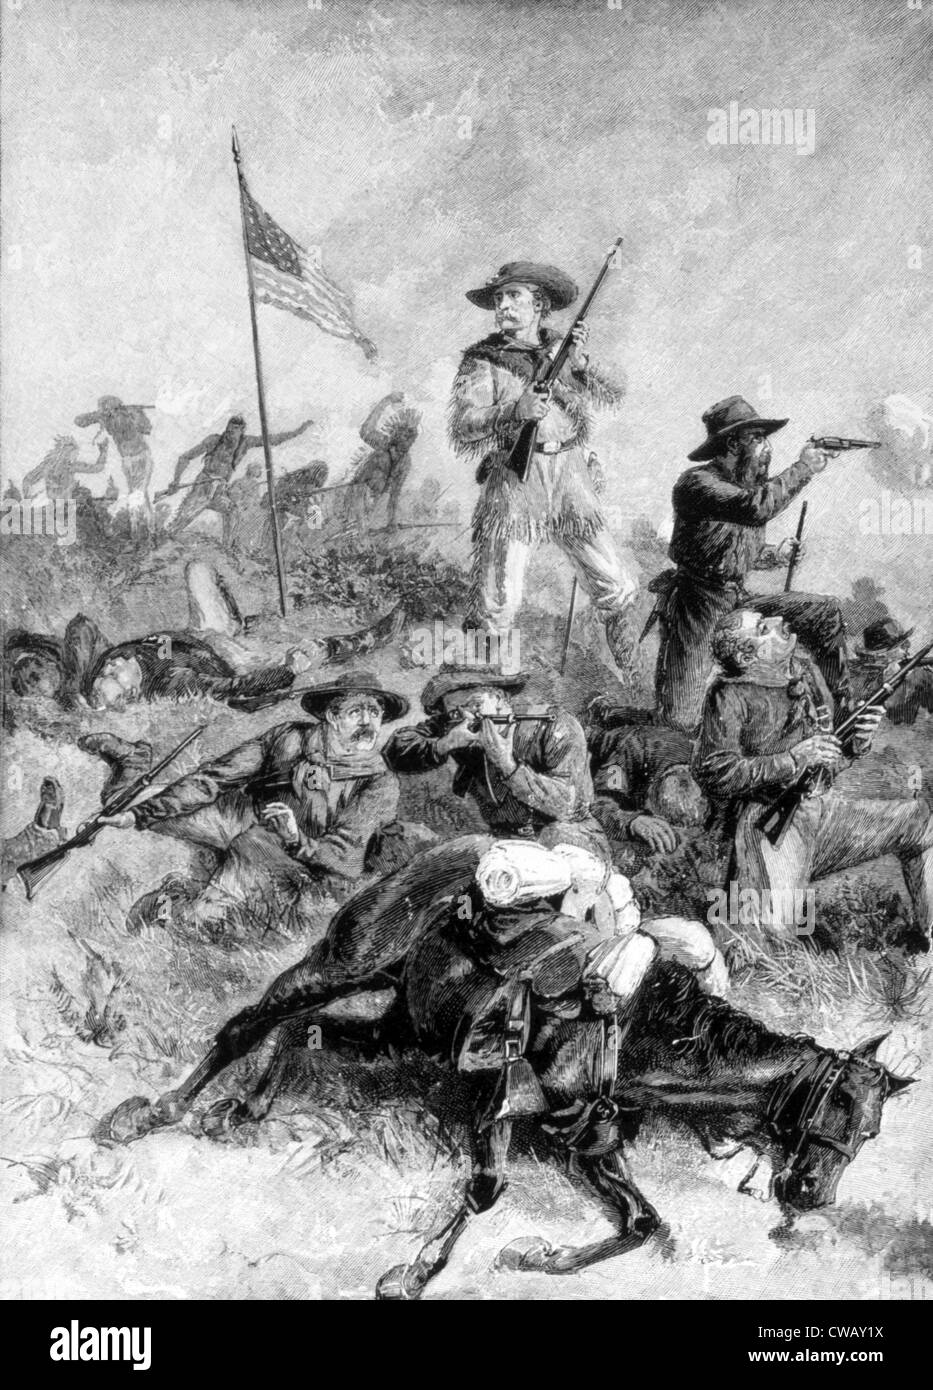 Custer's Last Stand, el General George Armstrong Custer en la batalla de Little Bighorn, 1876 Foto de stock